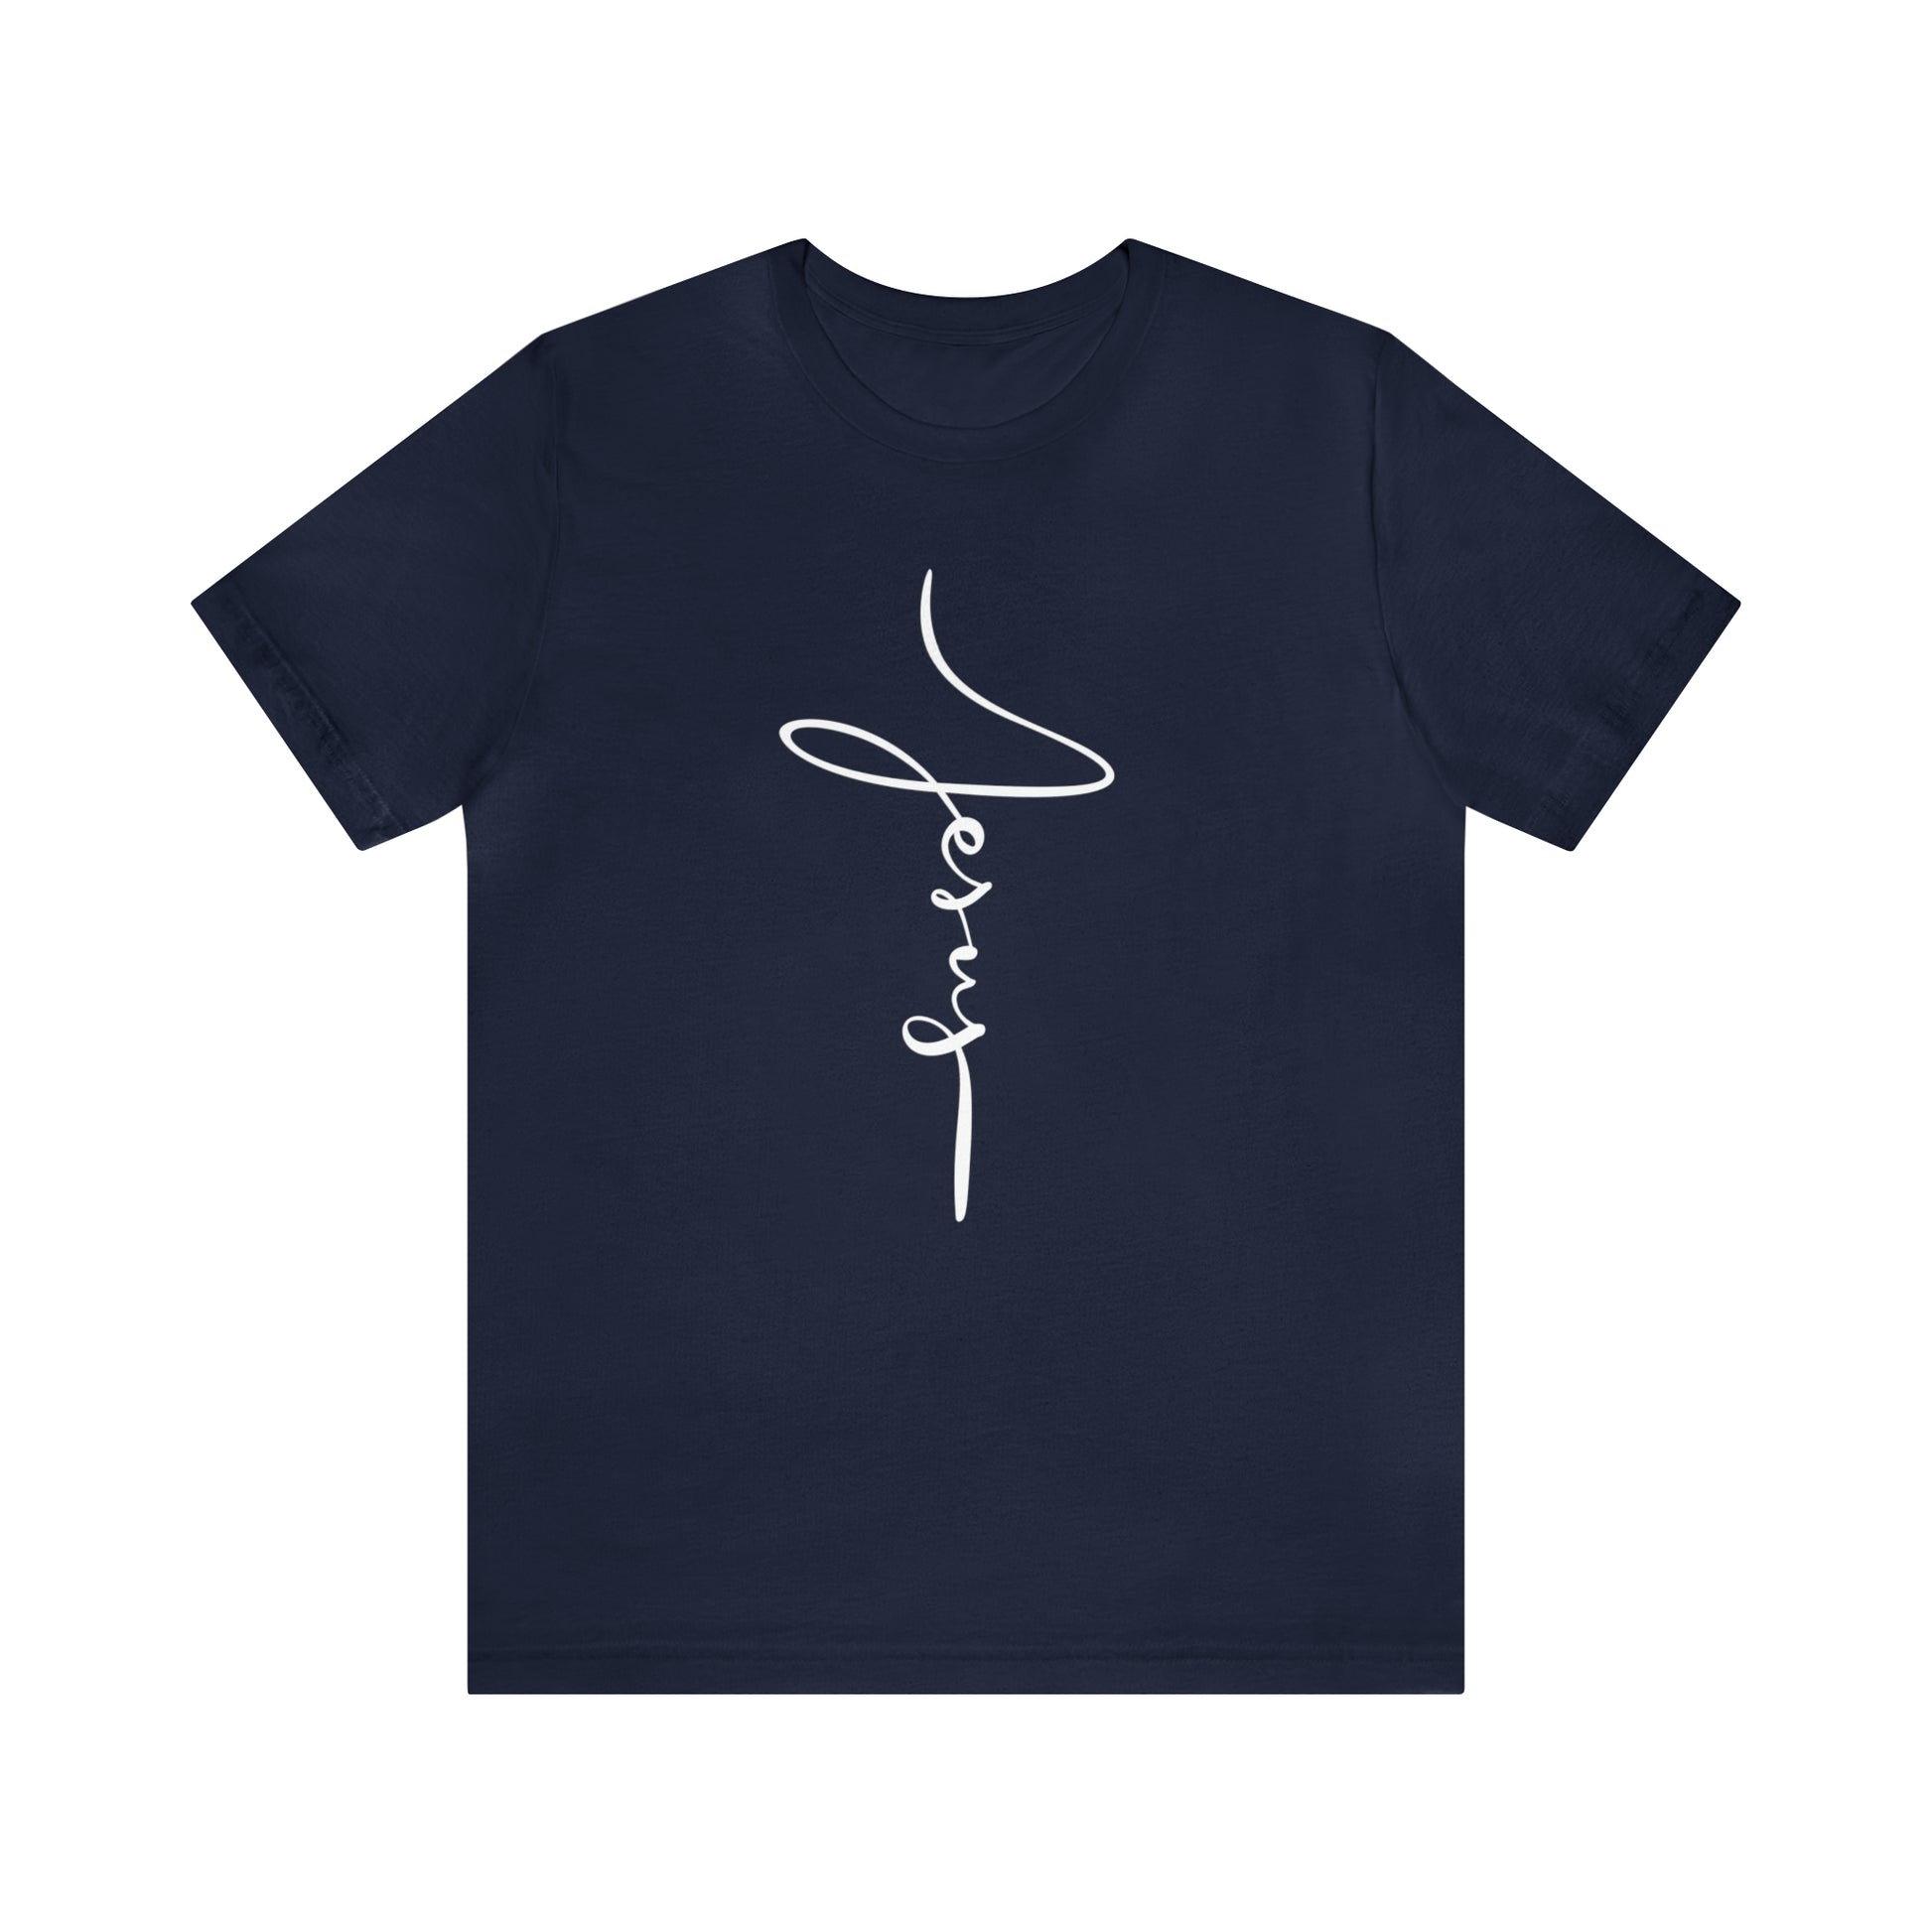 Jesus Cross Christian T-Shirt - Cursive White Font Neutral Color Tees Navy flatlay